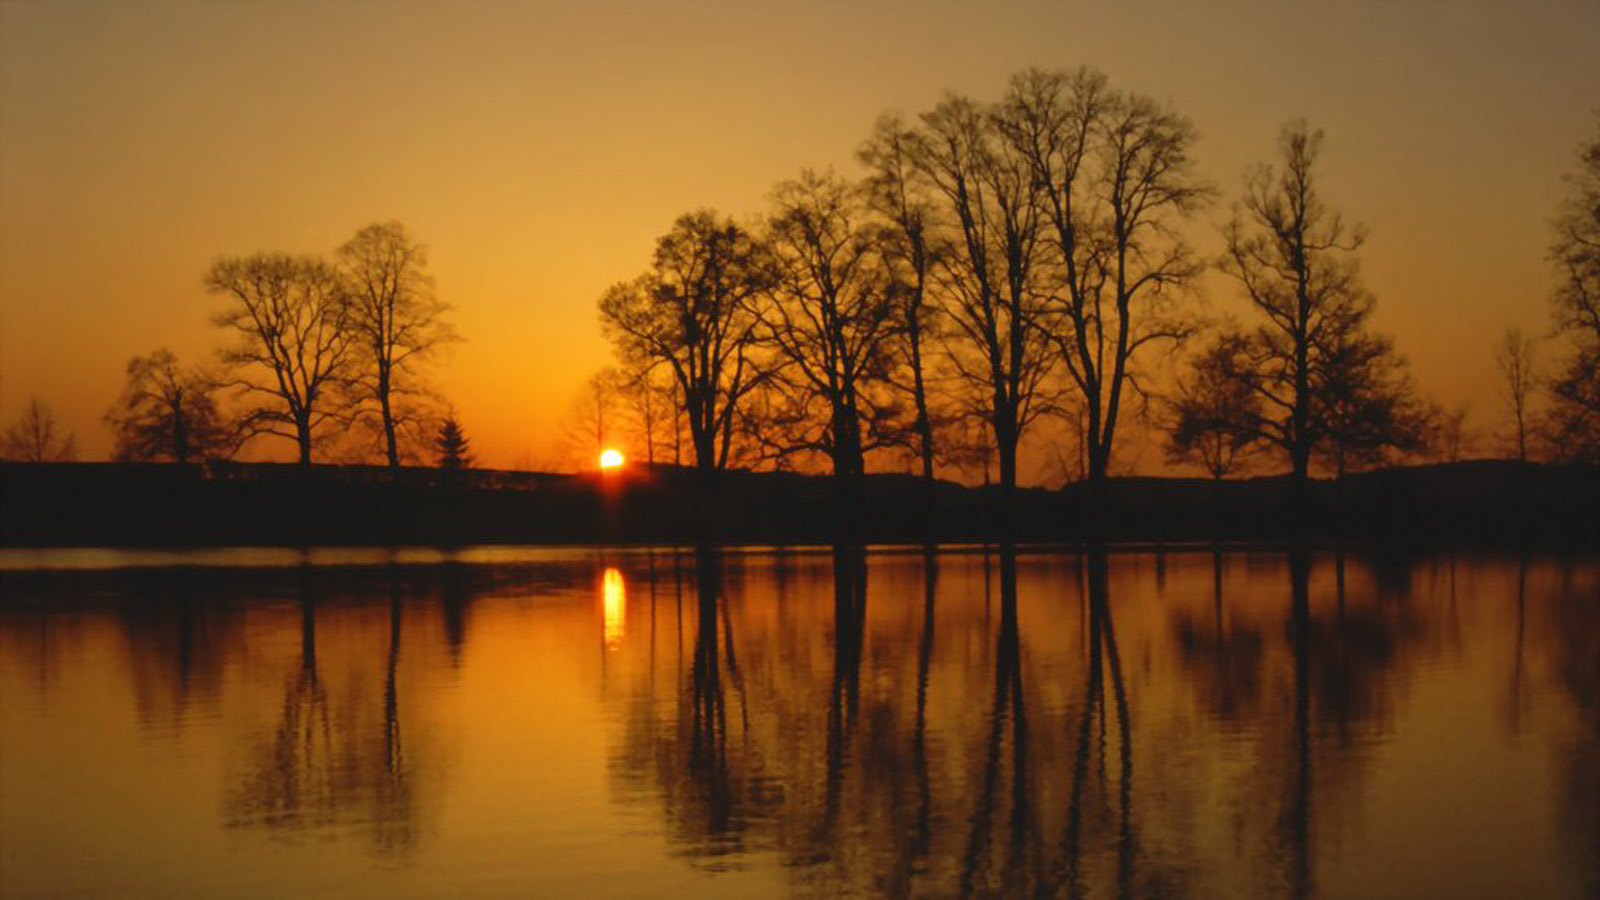 Beautiful sunset scenery desktop background picture